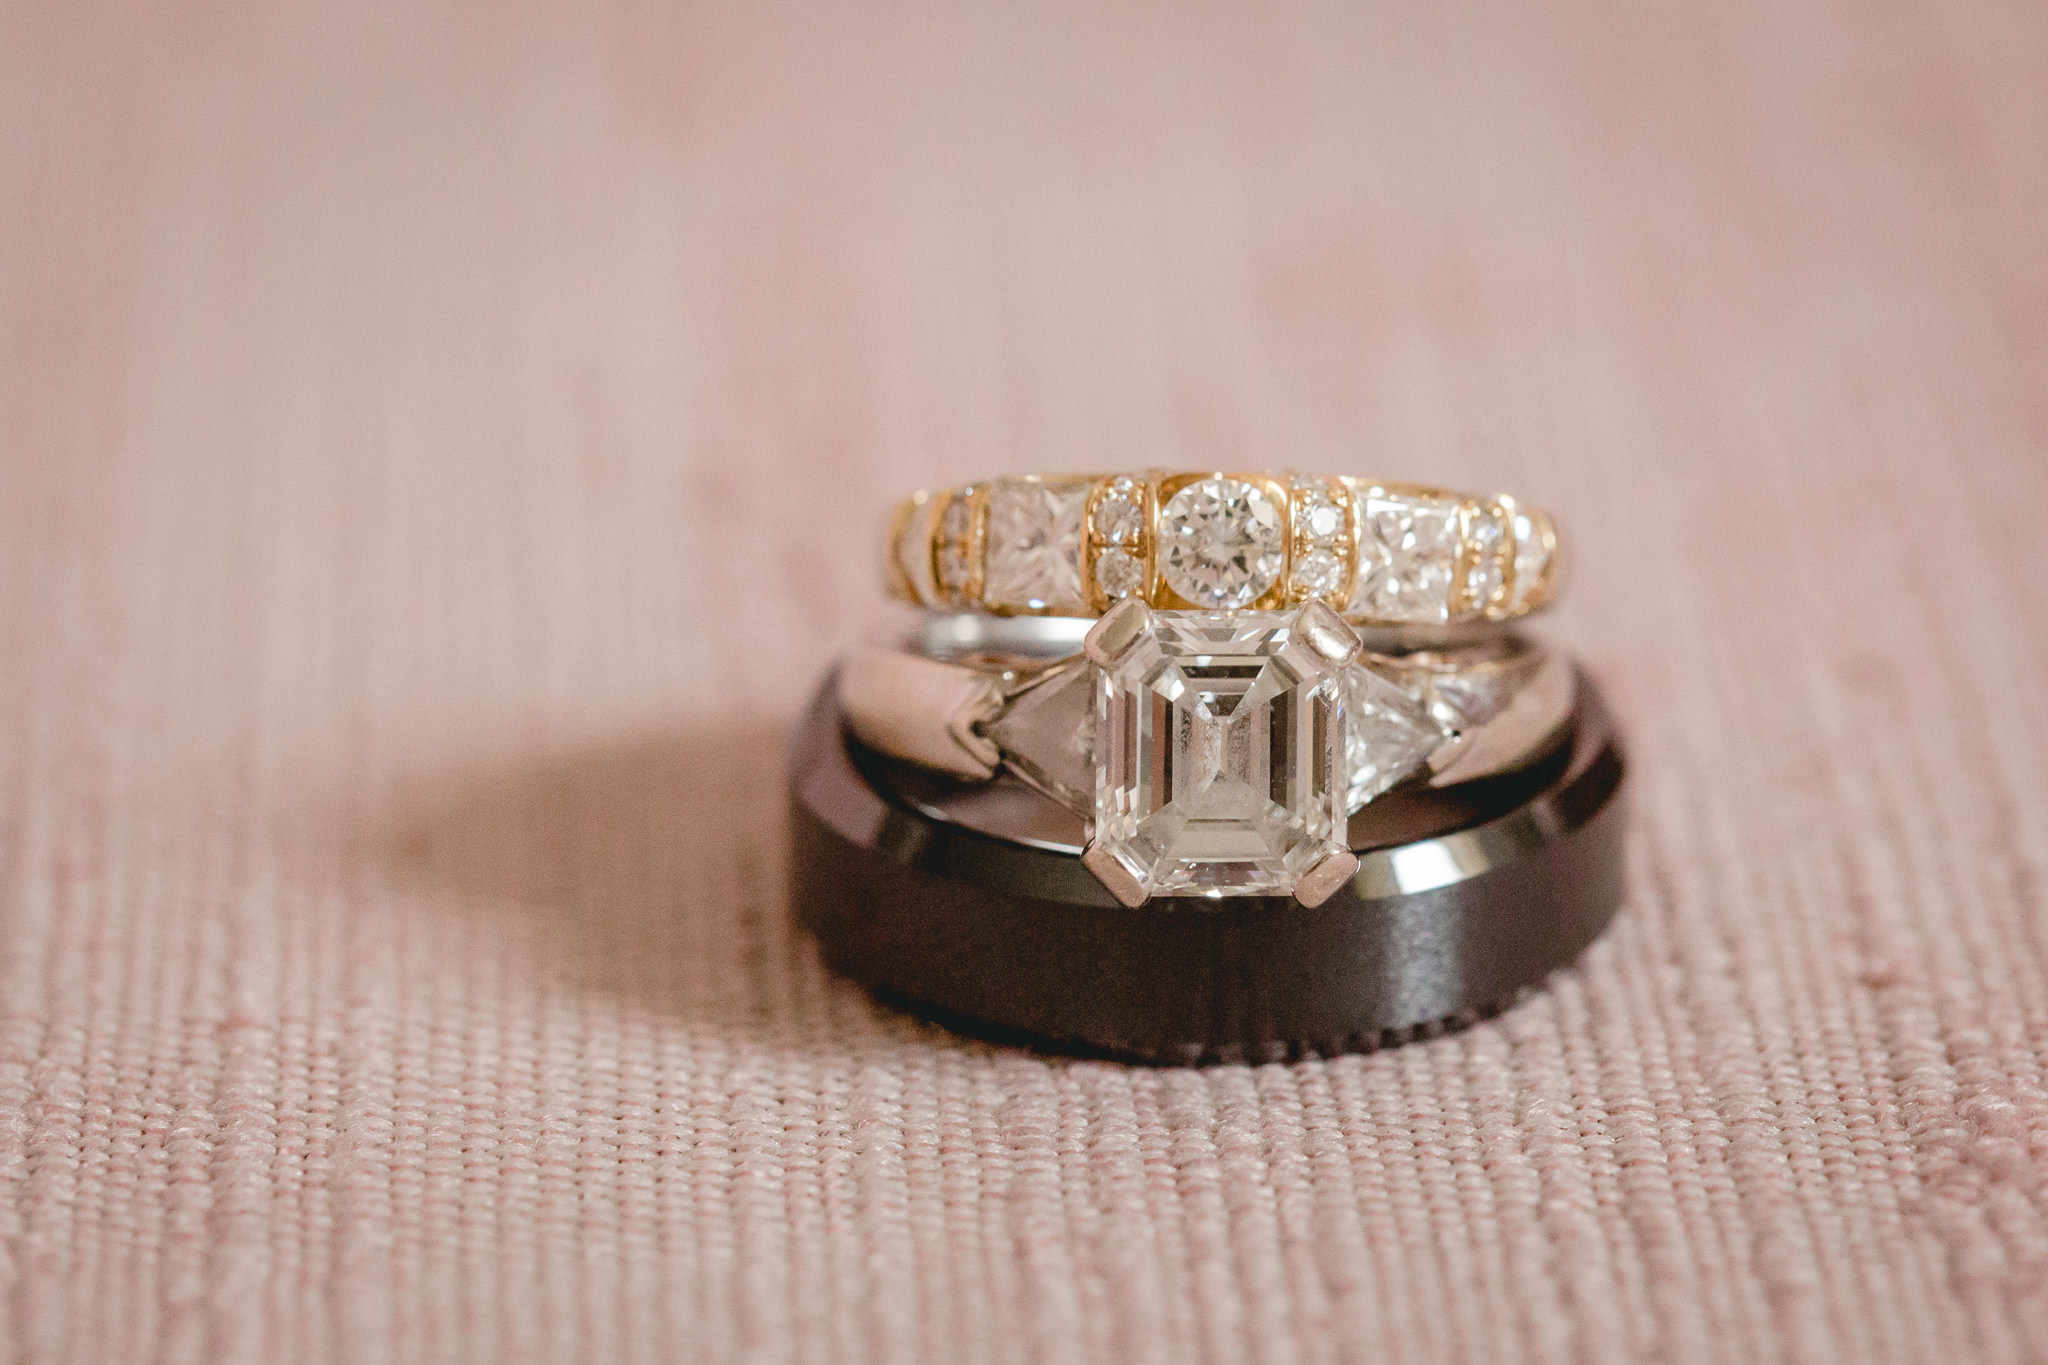 Closeup macro photo of engagement ring and wedding bands